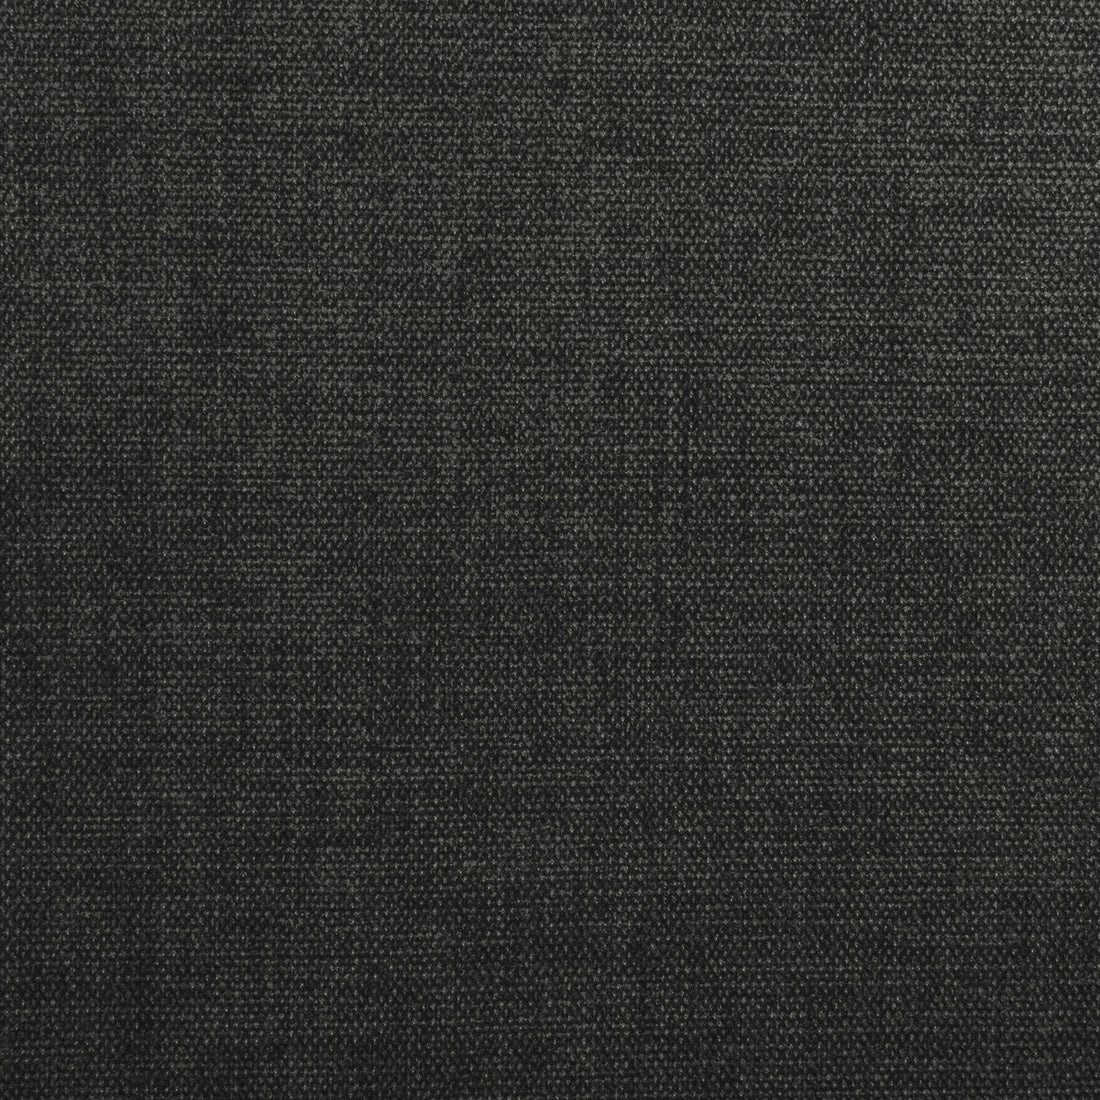 Kravet Smart fabric in 34959-821 color - pattern 34959.821.0 - by Kravet Smart in the Performance Kravetarmor collection